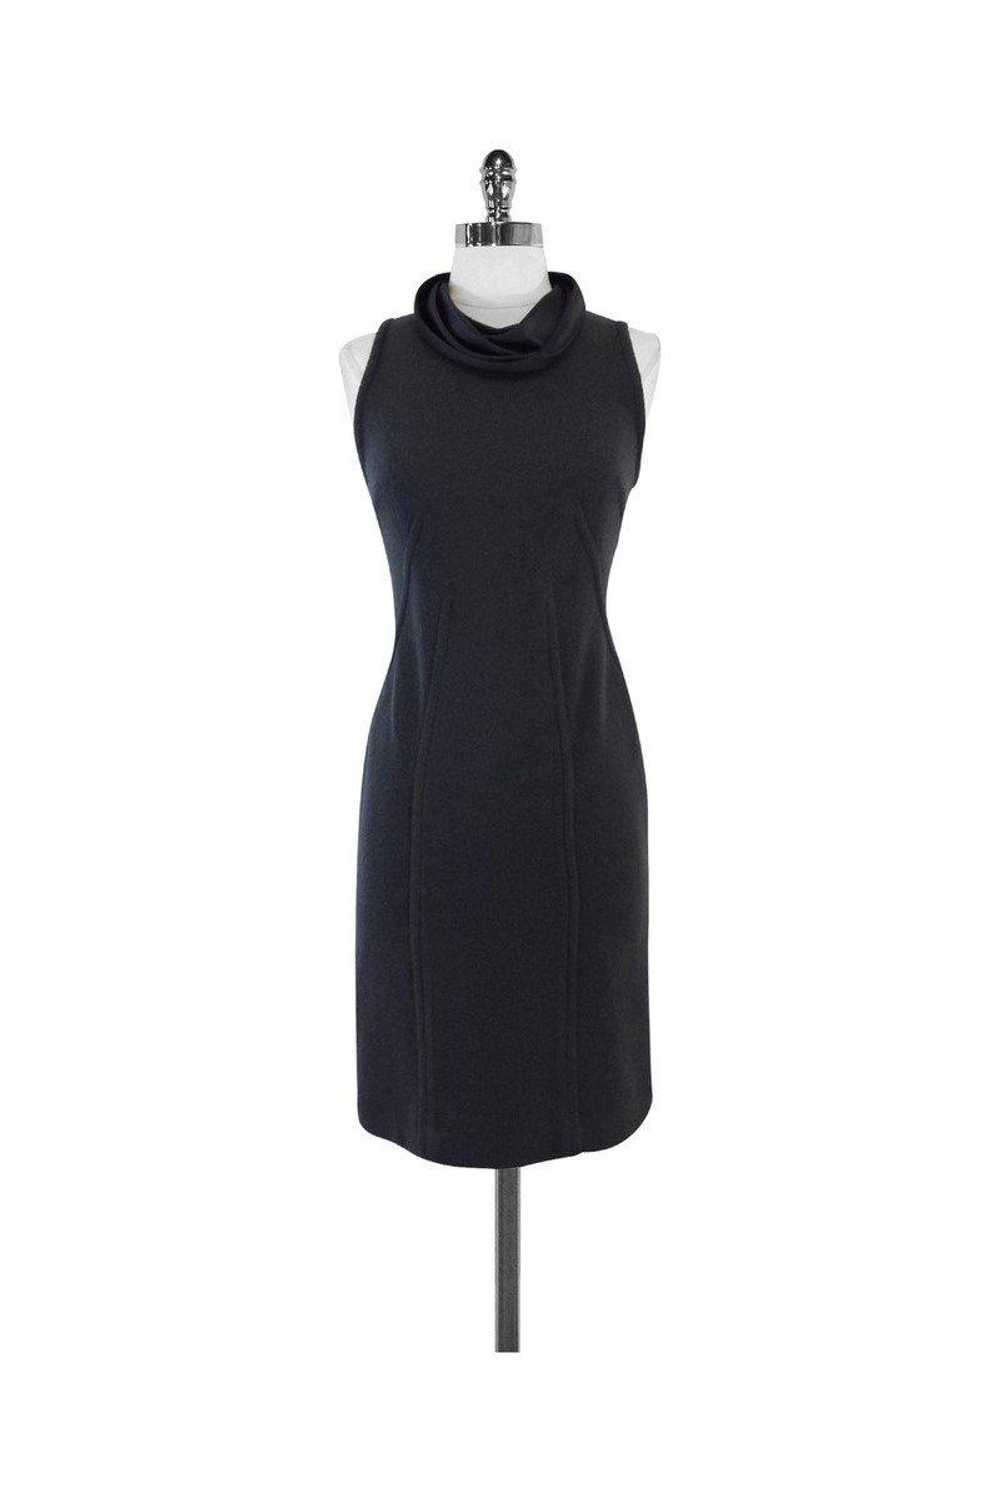 Giorgio Armani - Grey Wool Sleeveless Dress Sz 4 - image 1